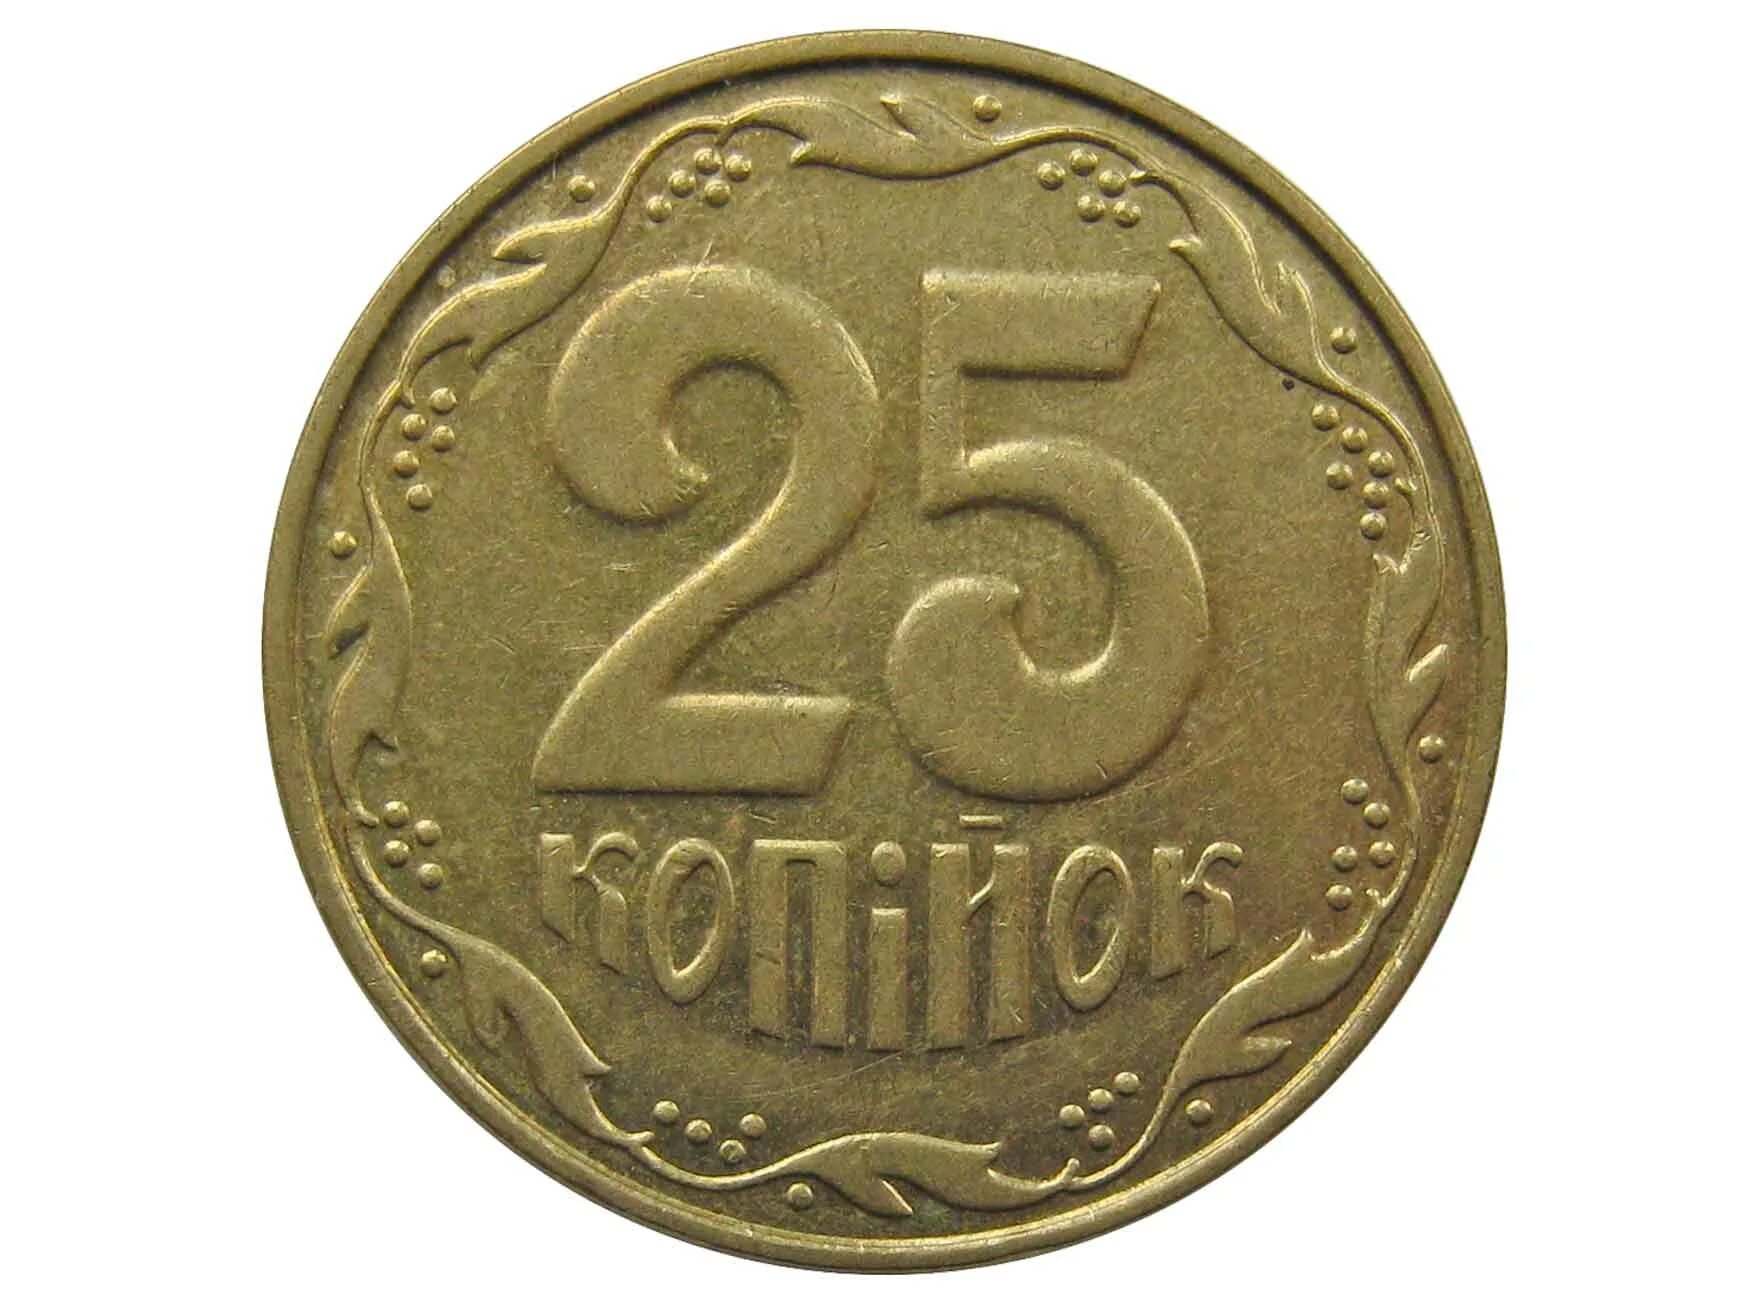 50 25 копеек. Украина 25 копеек 2014. Монета 2 копейки 1912. Украинские 25 копеек. 25 Копеек 1992 Украина.